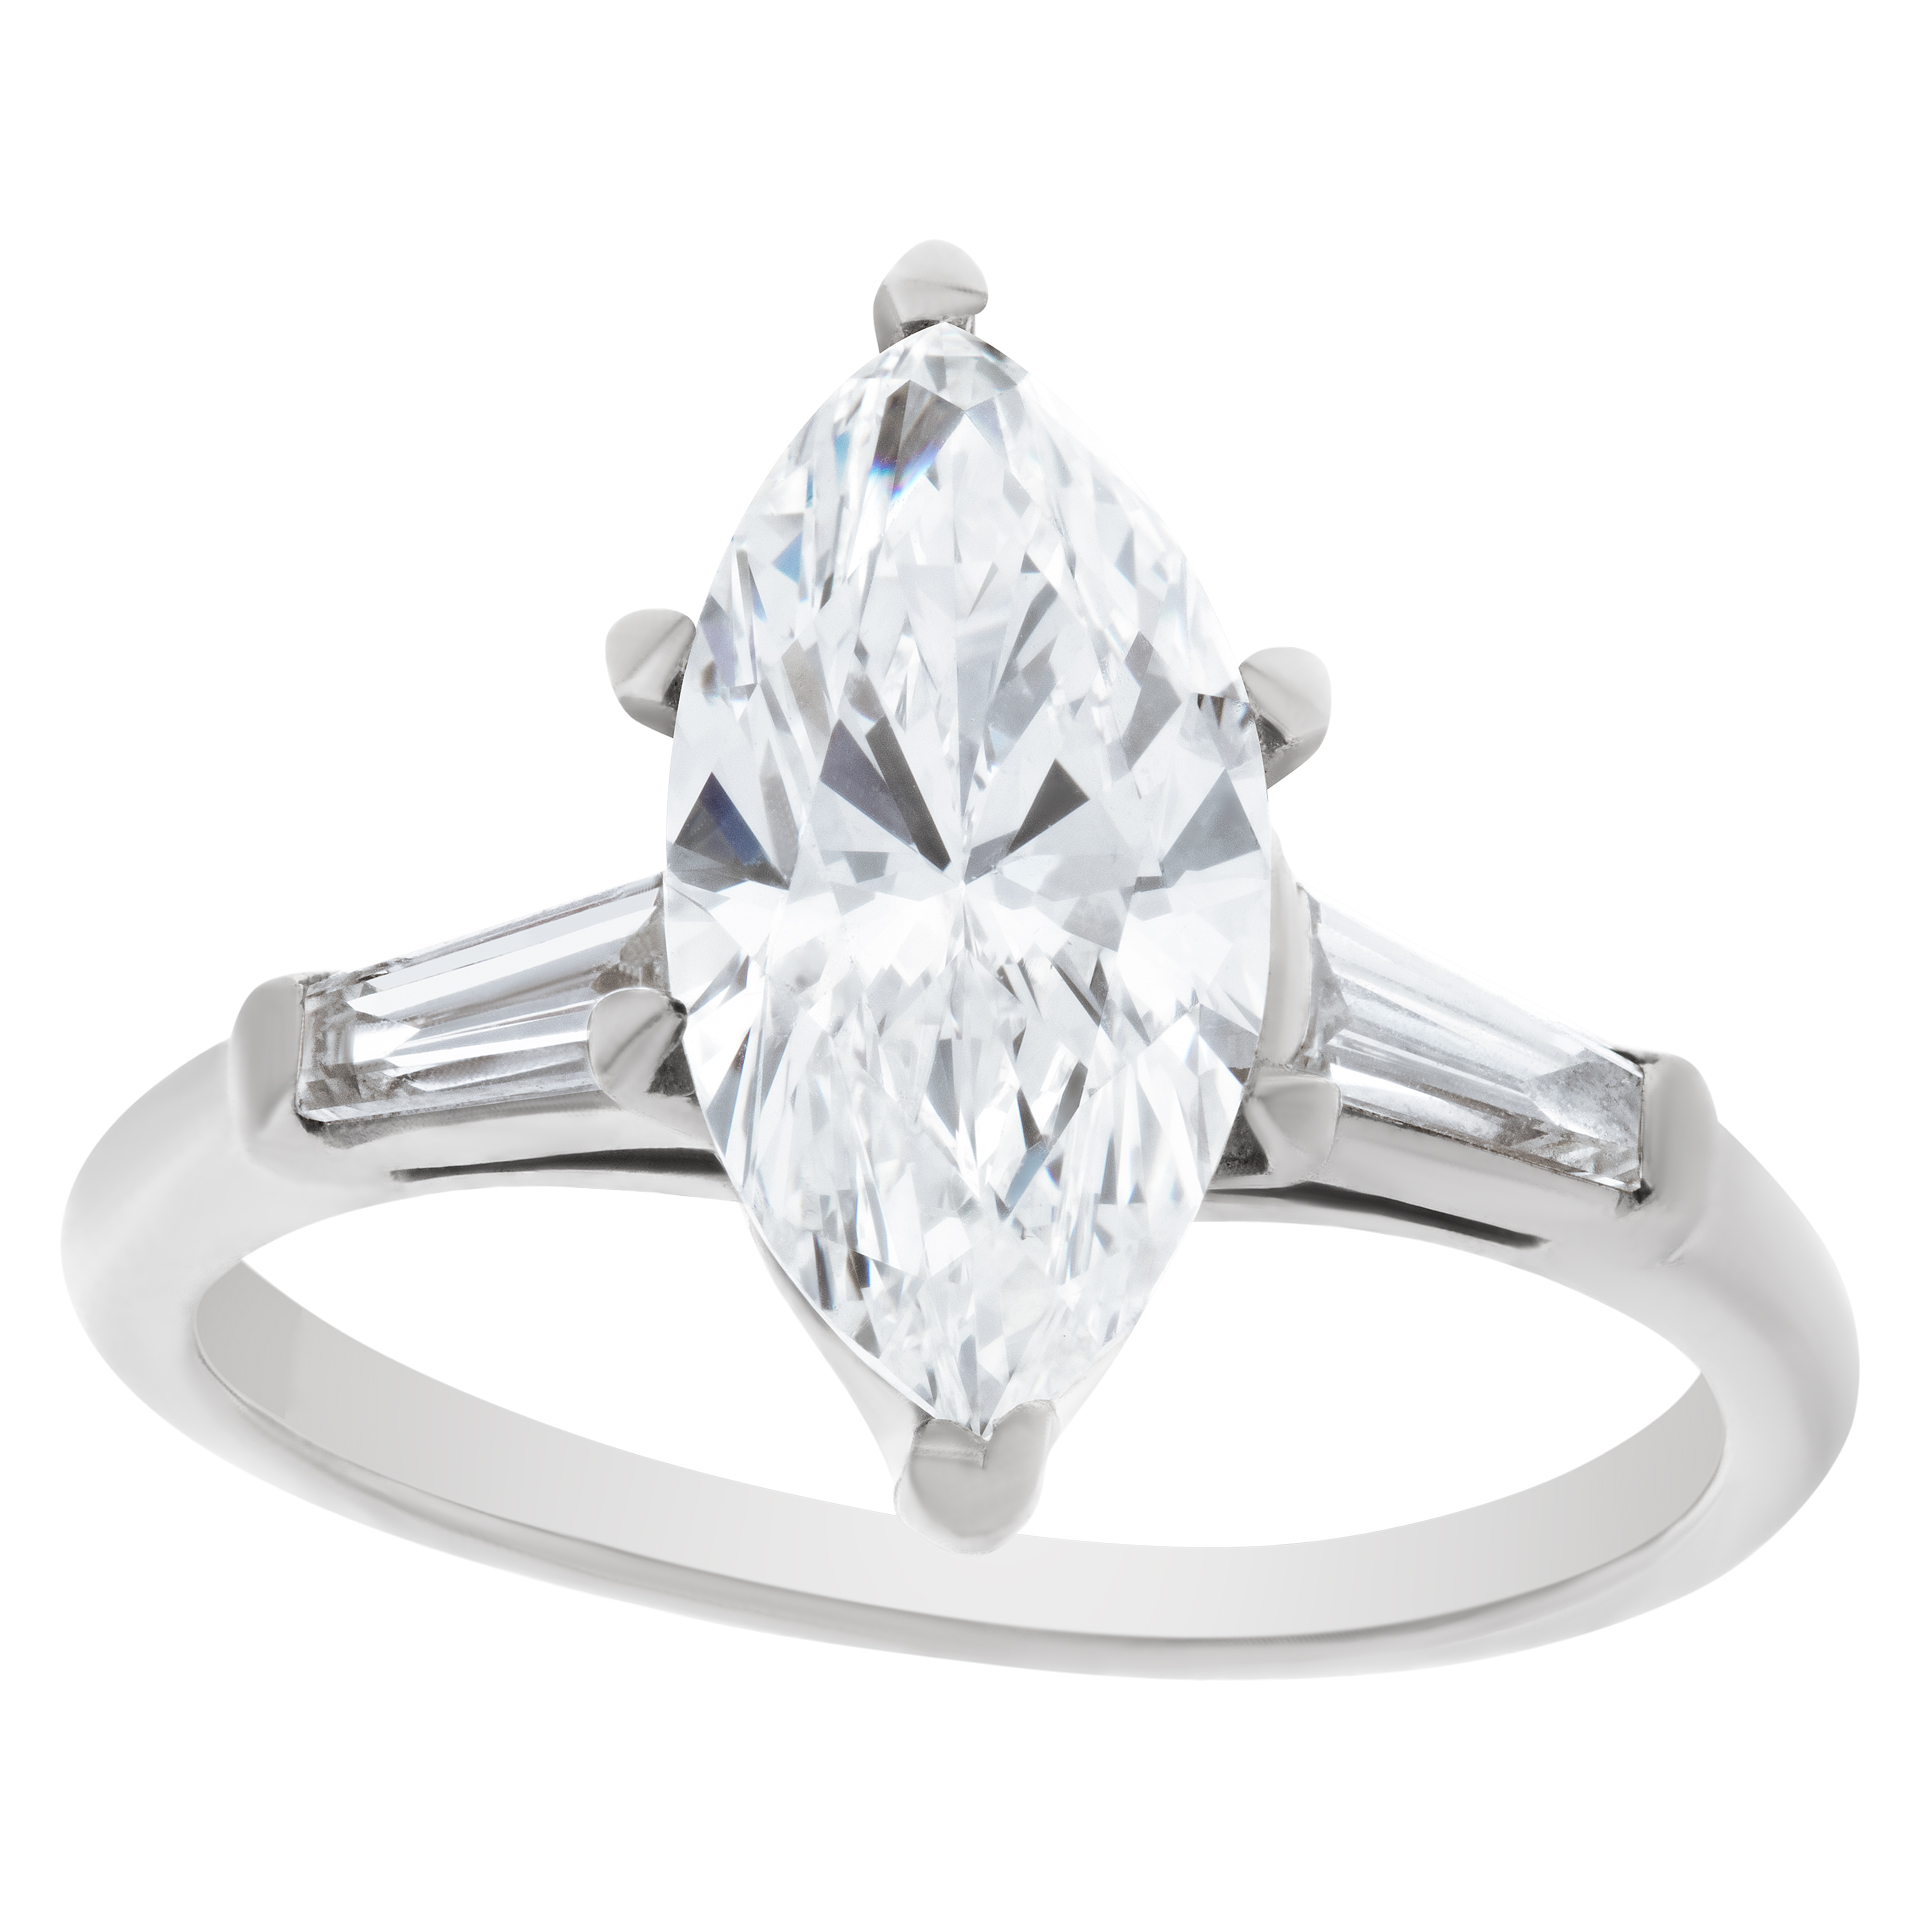 GIA certified marquise brilliant cut diamond  1.75 carat ( I color, VS1 clarity)